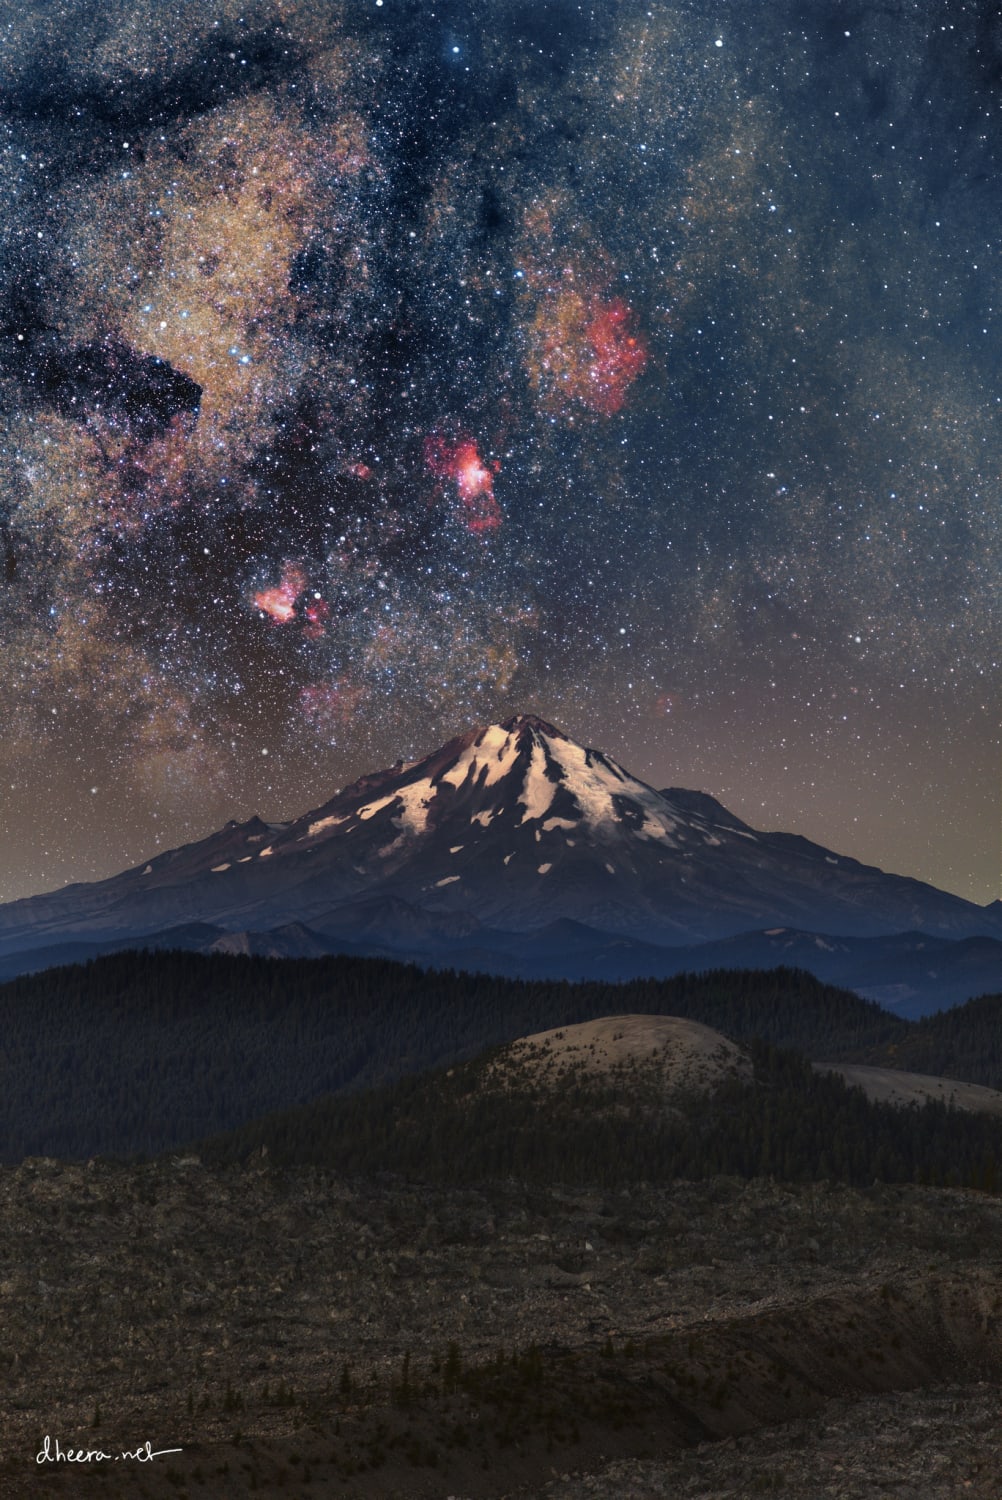 Amazing view of three nebulas over Mt. Shasta, California